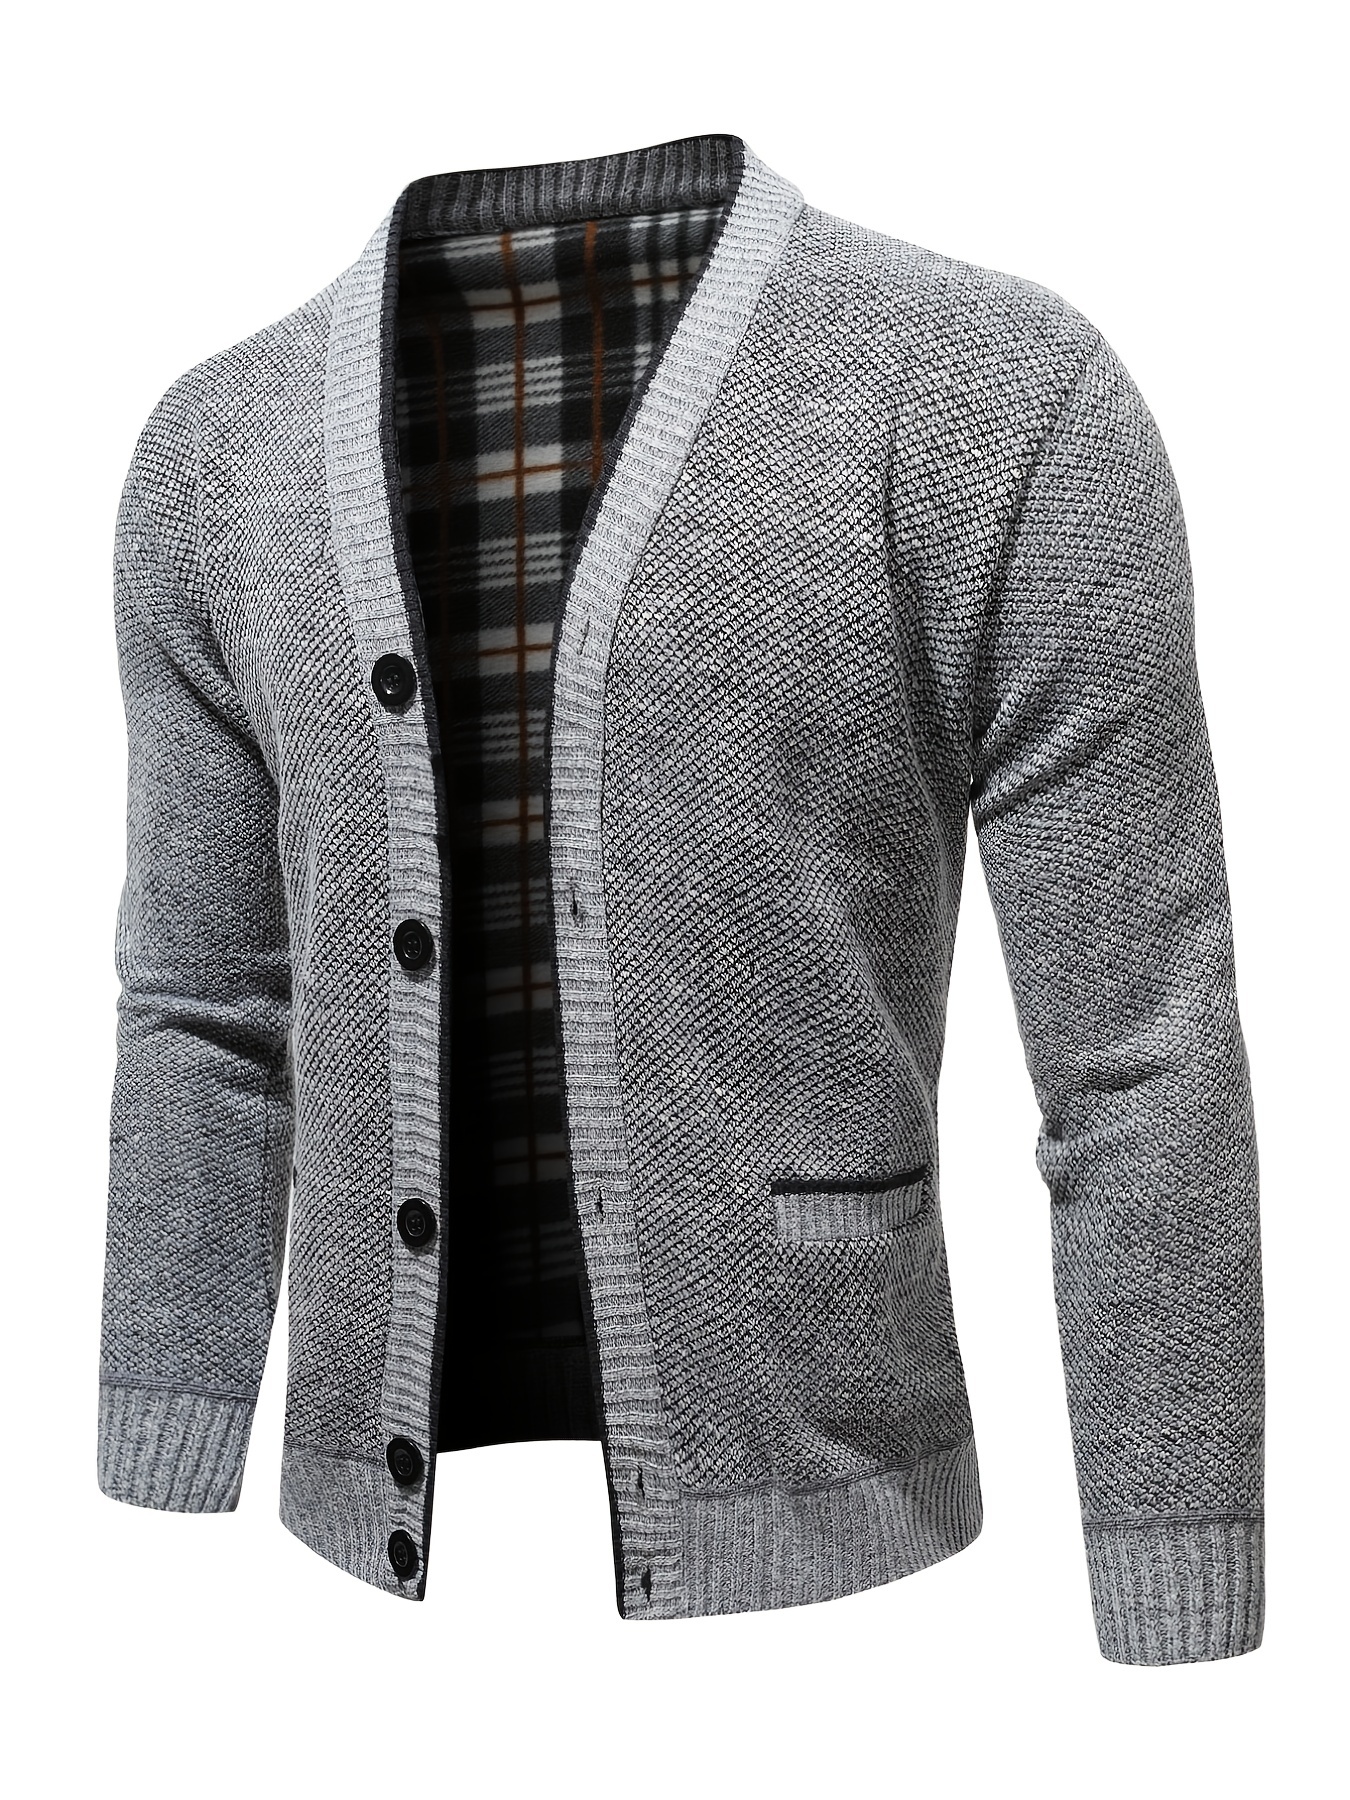 Men's V-Neck Buttoned Cardigan Knitwear Basic Sweaters Jacket Slim Fit Warm  Tops